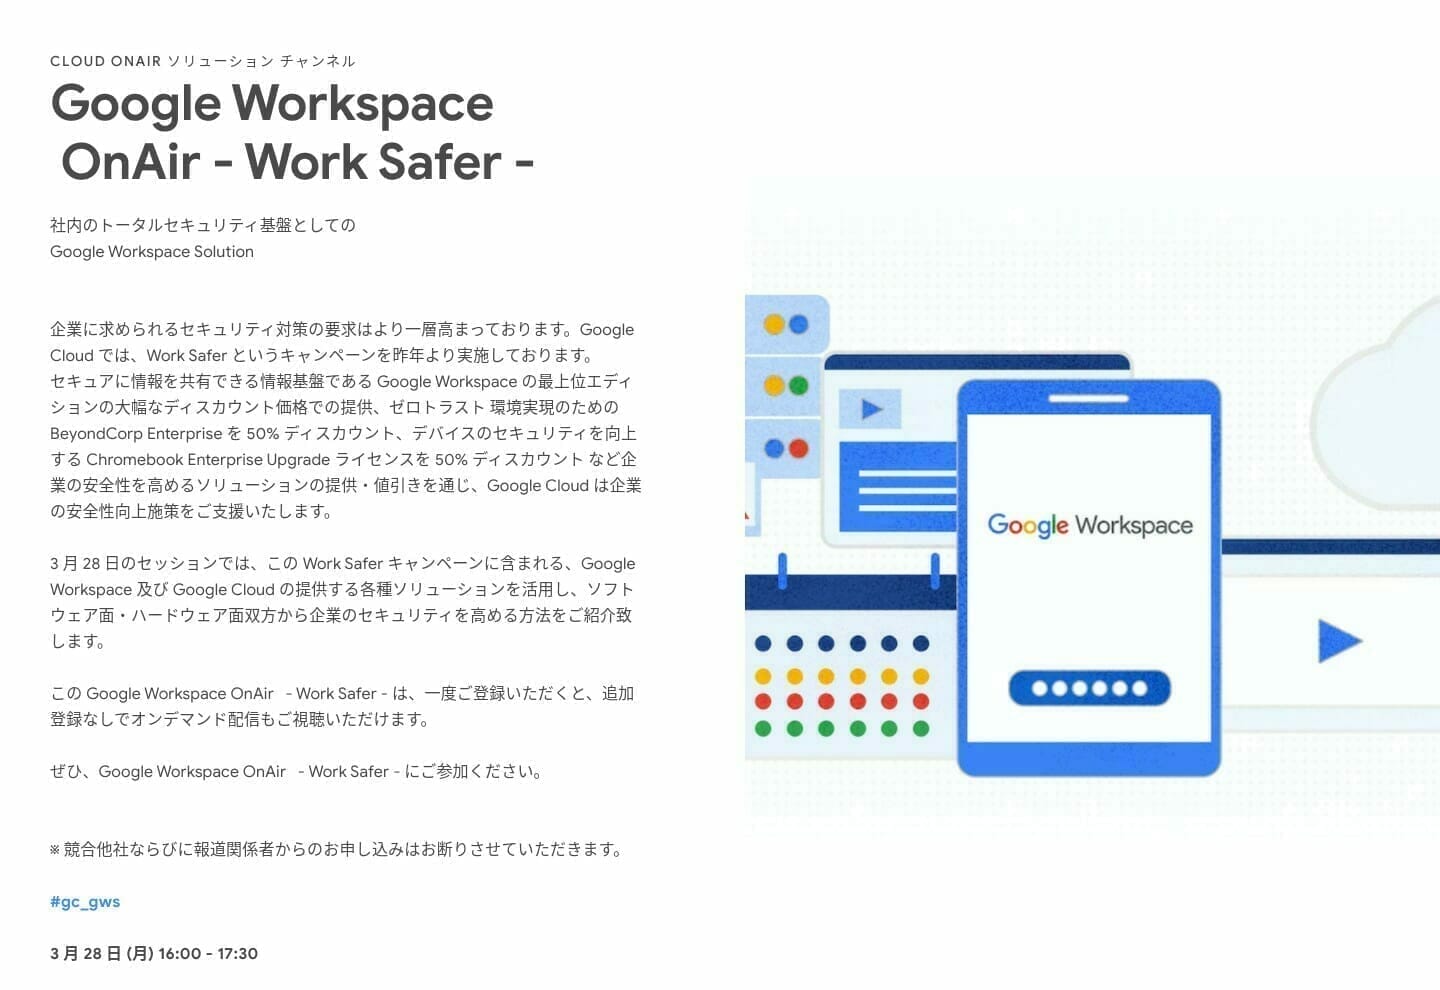 [GCP] Google Workspace OnAir - Work Safer - 社内のトータルセキュリティ基盤としての Google Workspace Solution